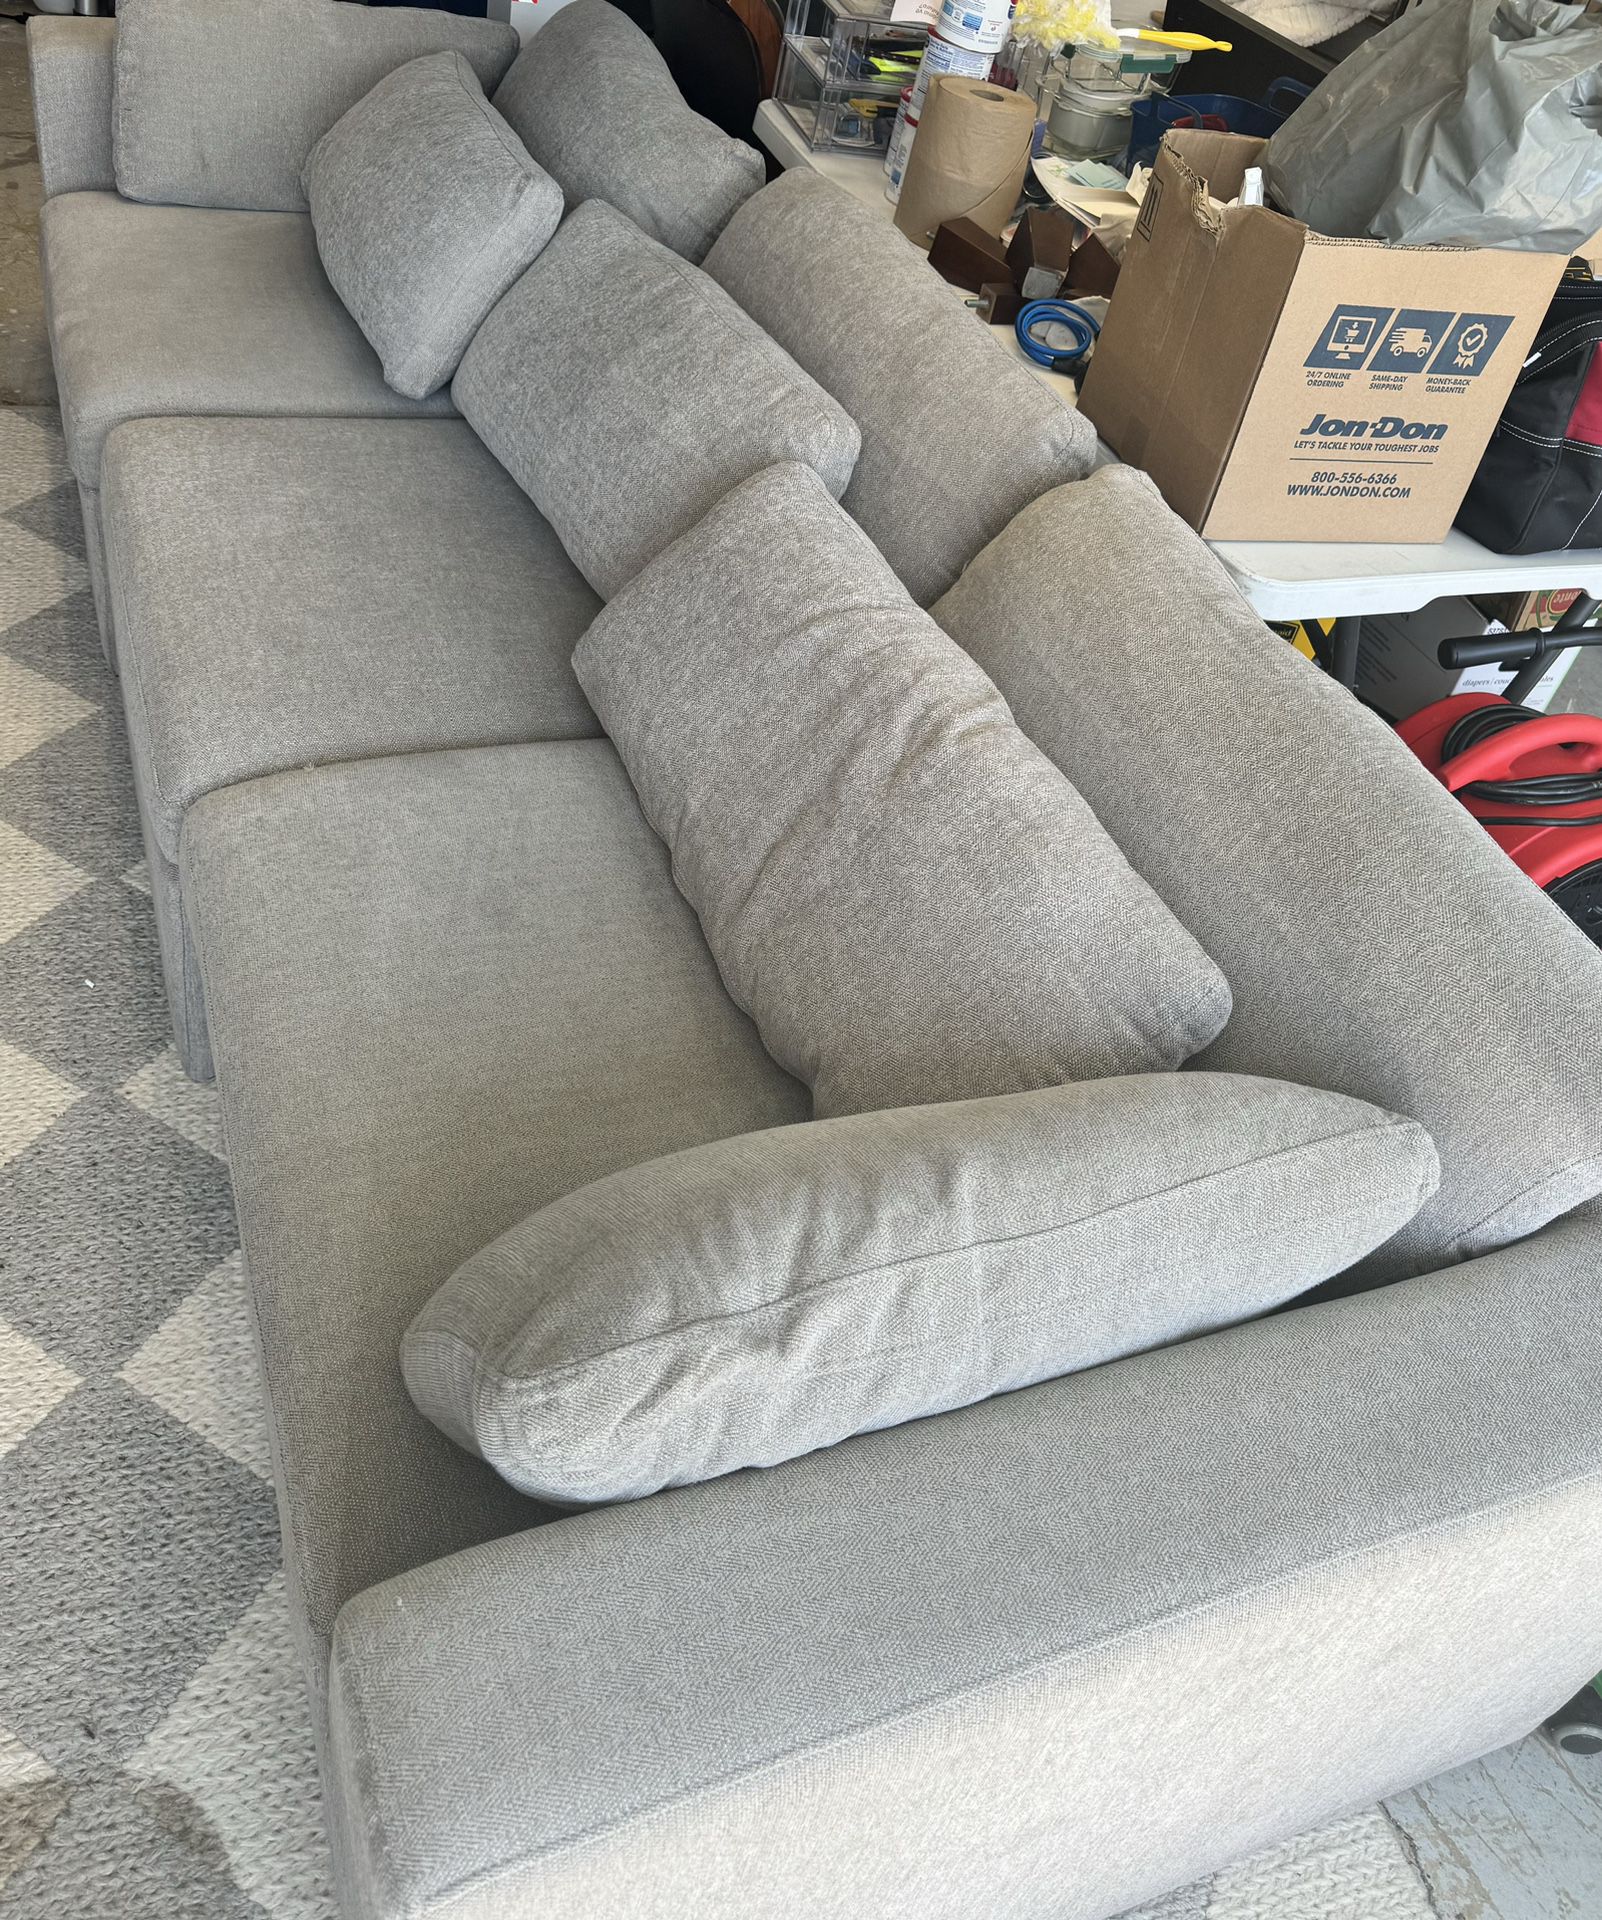 Sectional Fabric Sofa $150